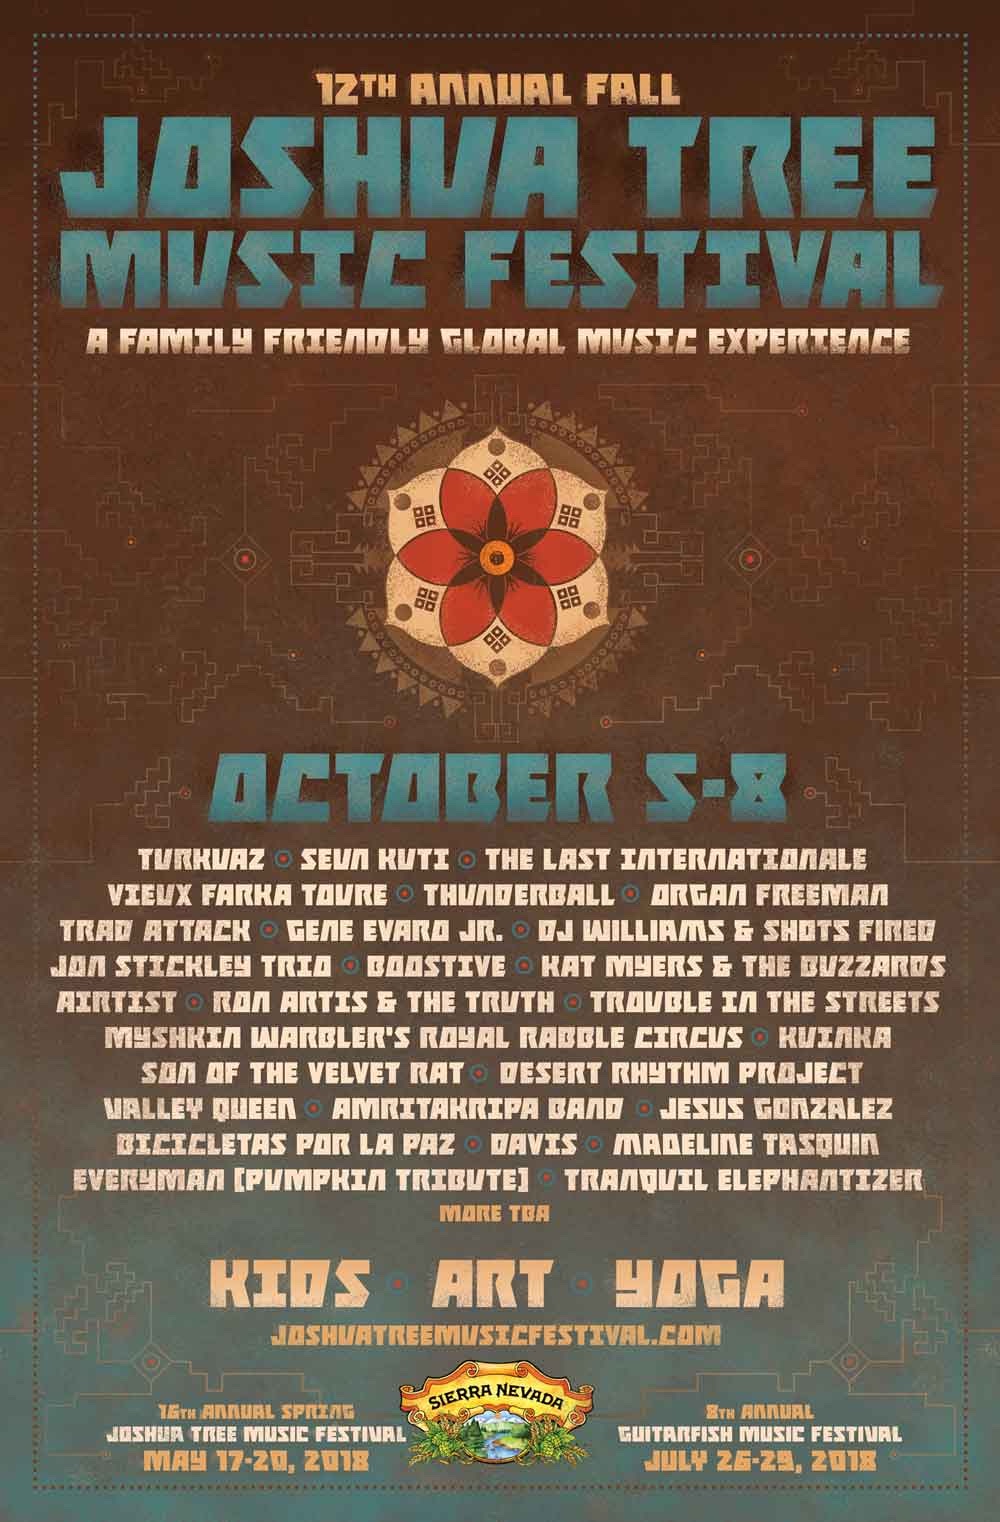 Fall Joshua Tree Music Festival 2017 Lineup poster image